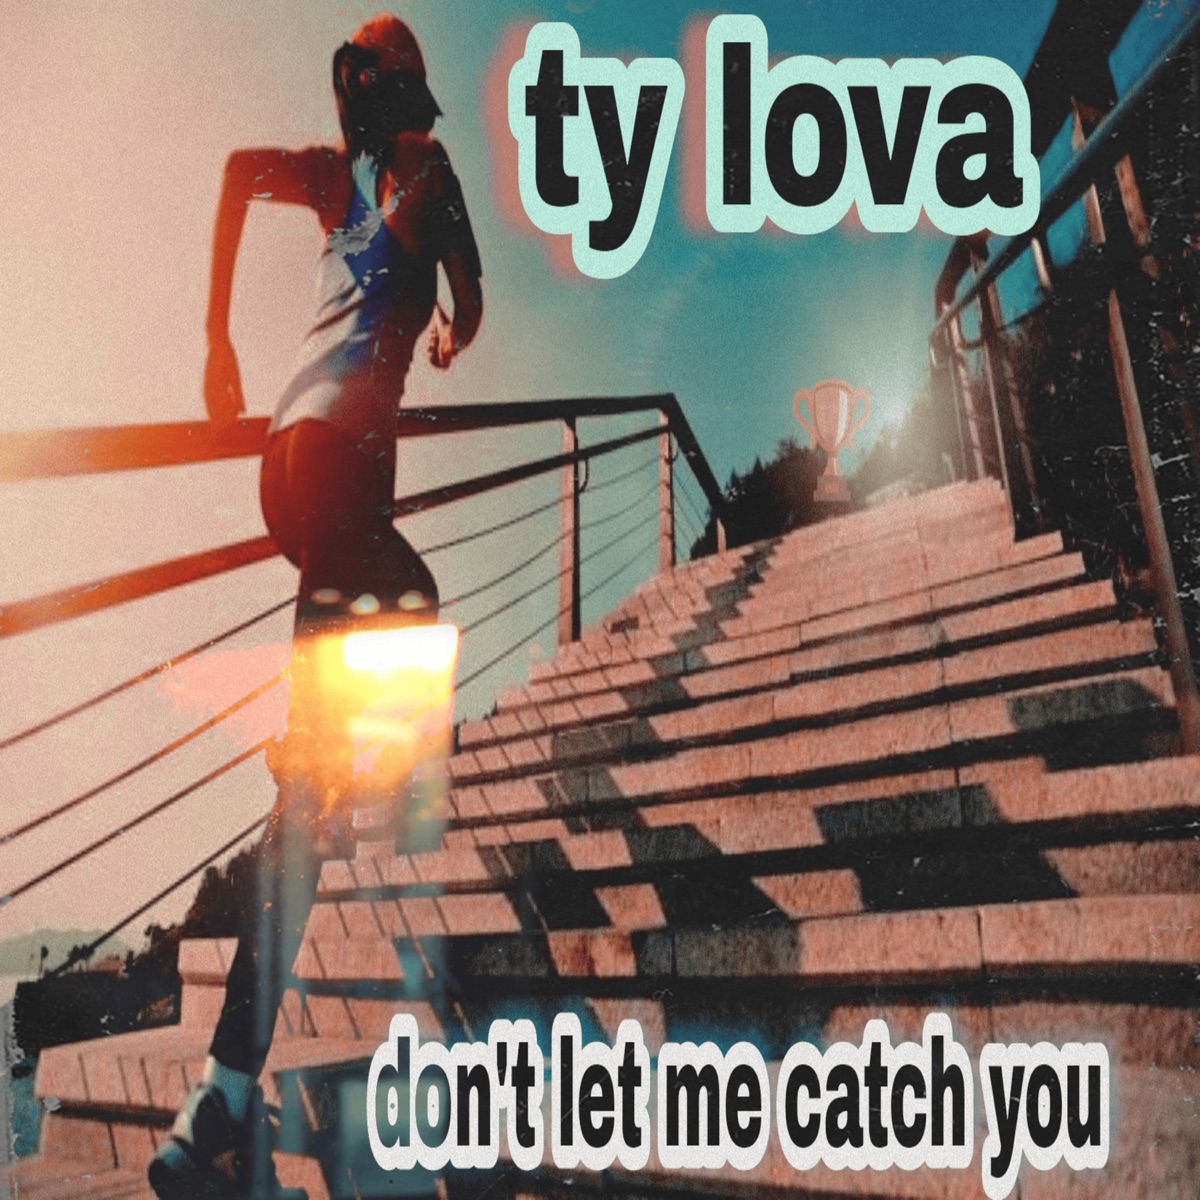 Loving Me - Single by Ty lova on Apple Music